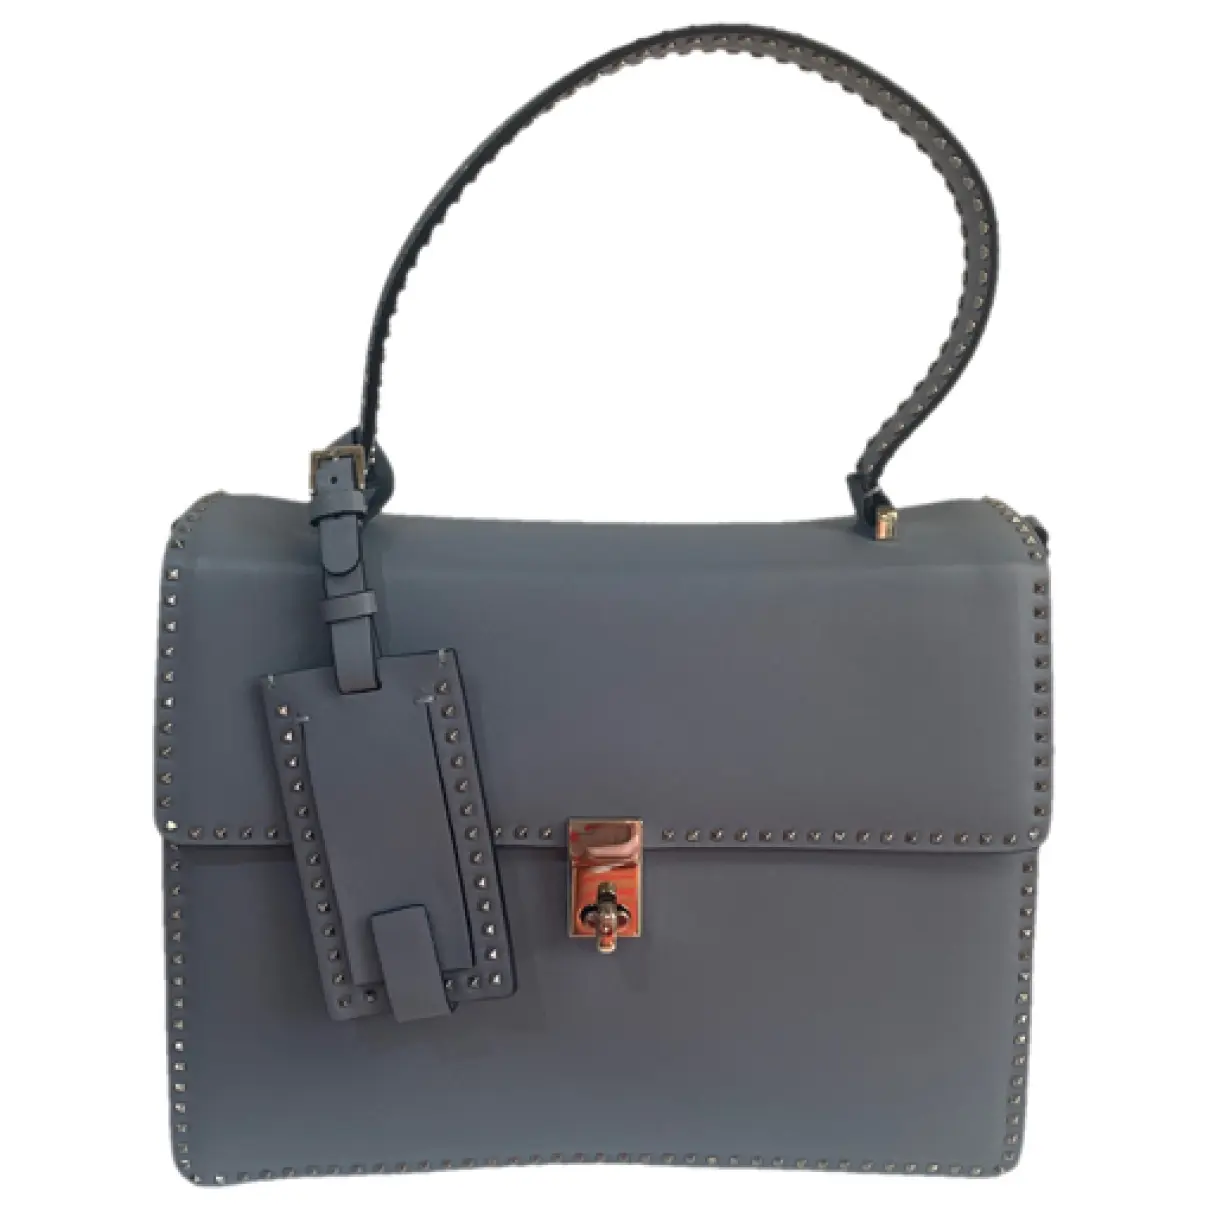 Panther bag leather handbag